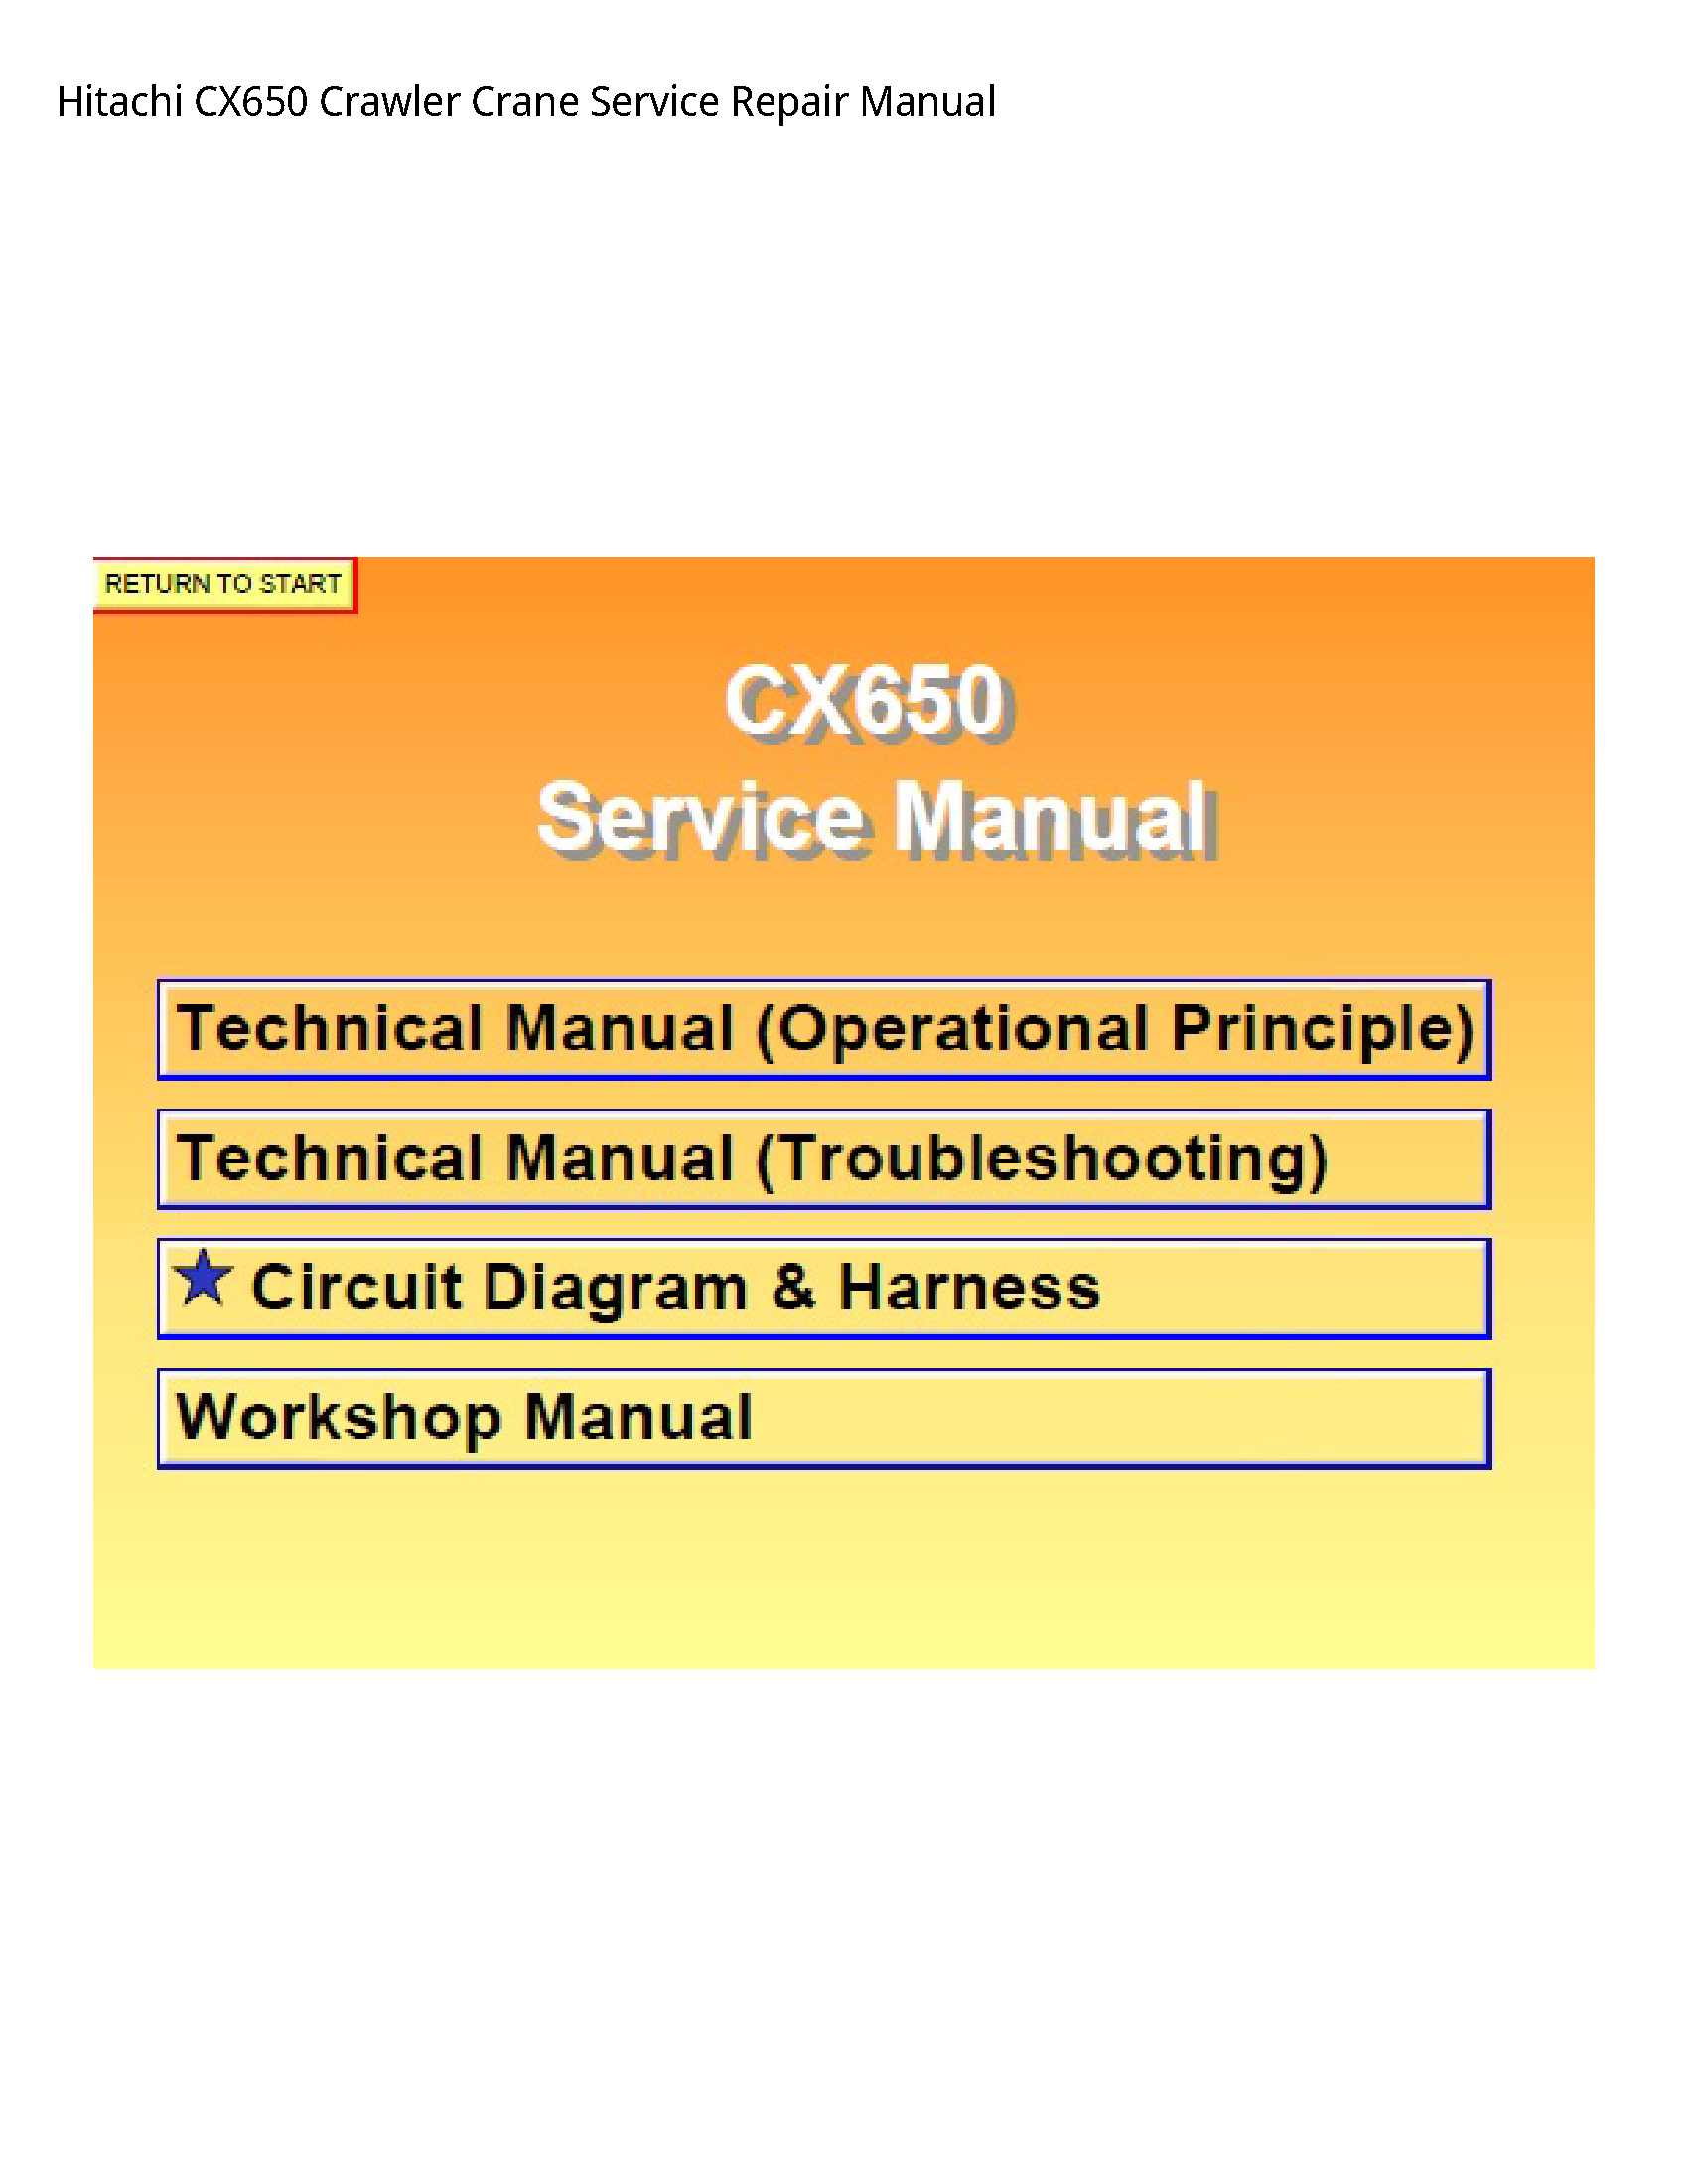 Hitachi CX650 Crawler Crane manual